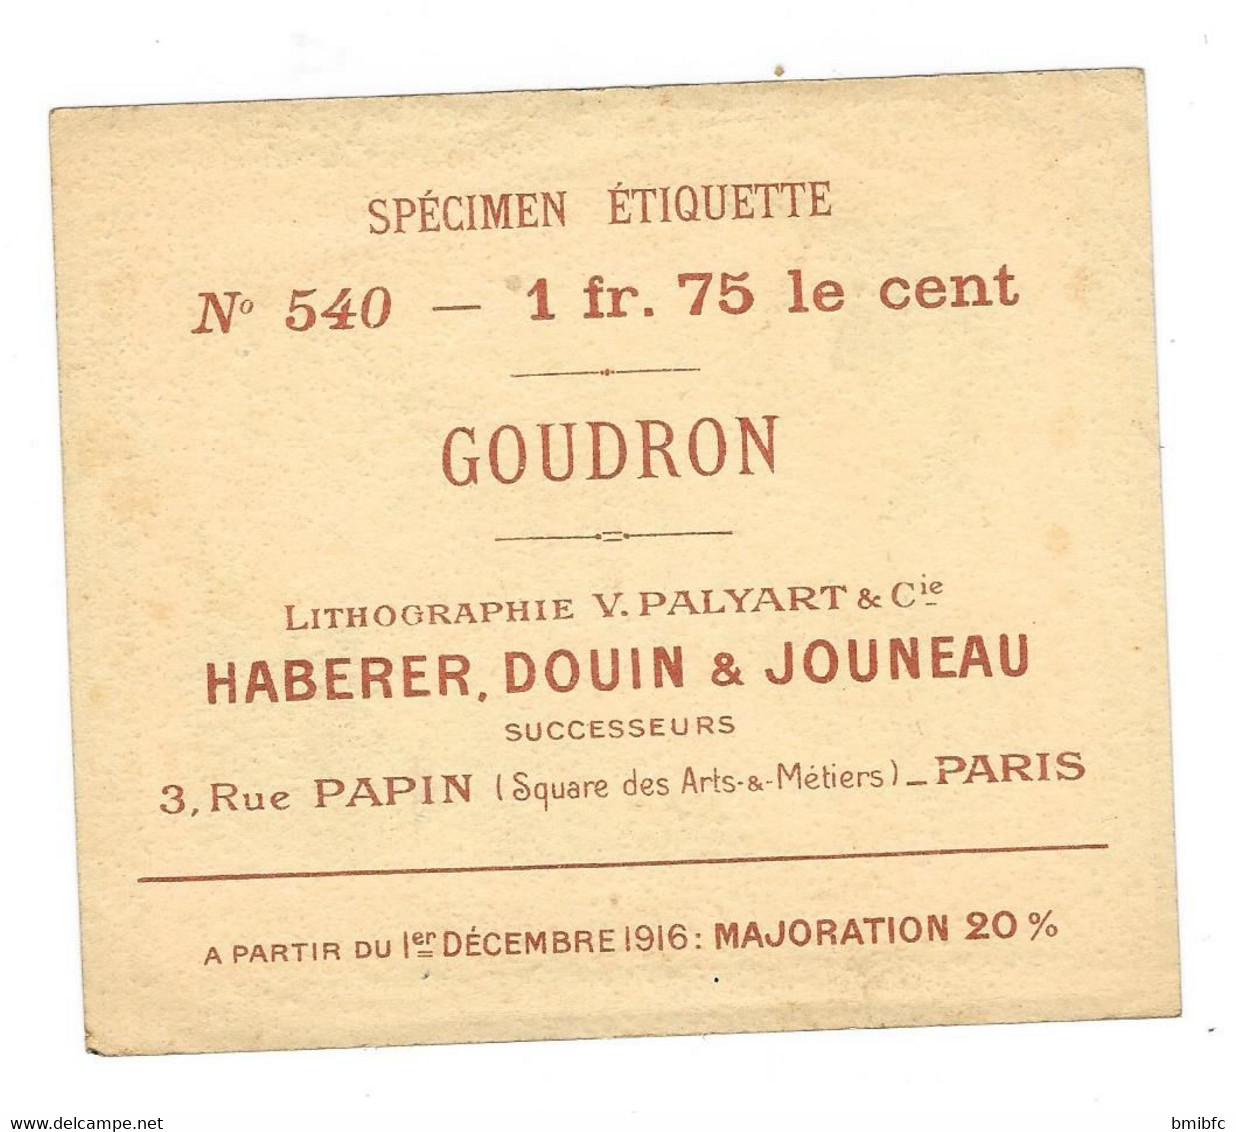 GOUDRON Liqueur Hygiénique - Alkohole & Spirituosen